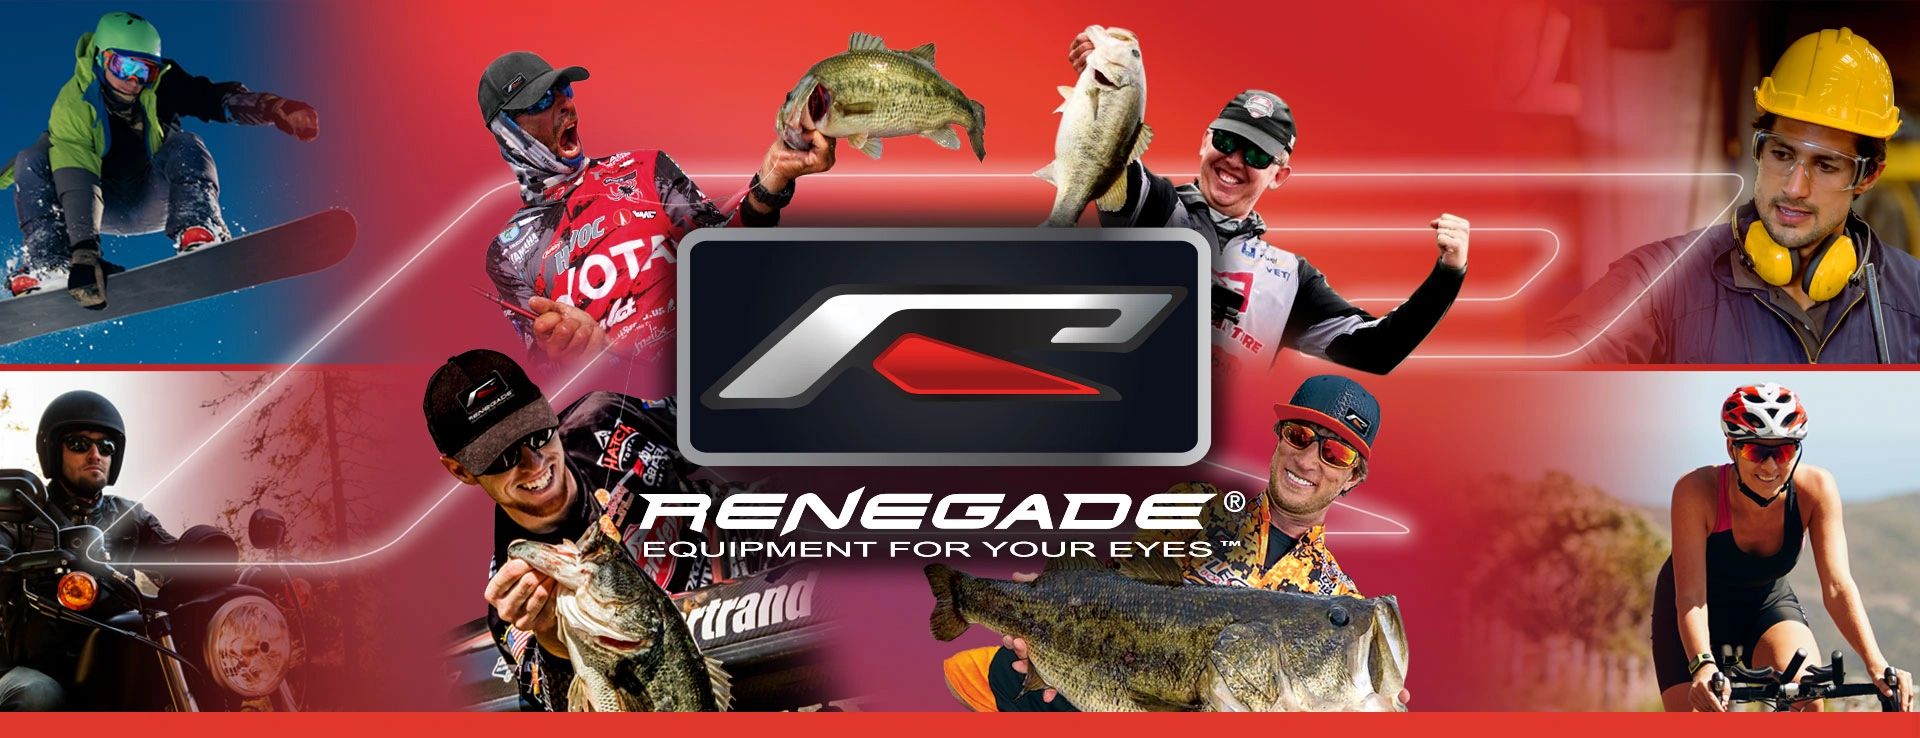 RENEGADE - Fishing Sunglasses, Polarized Sunglasses, Fishing Glasses